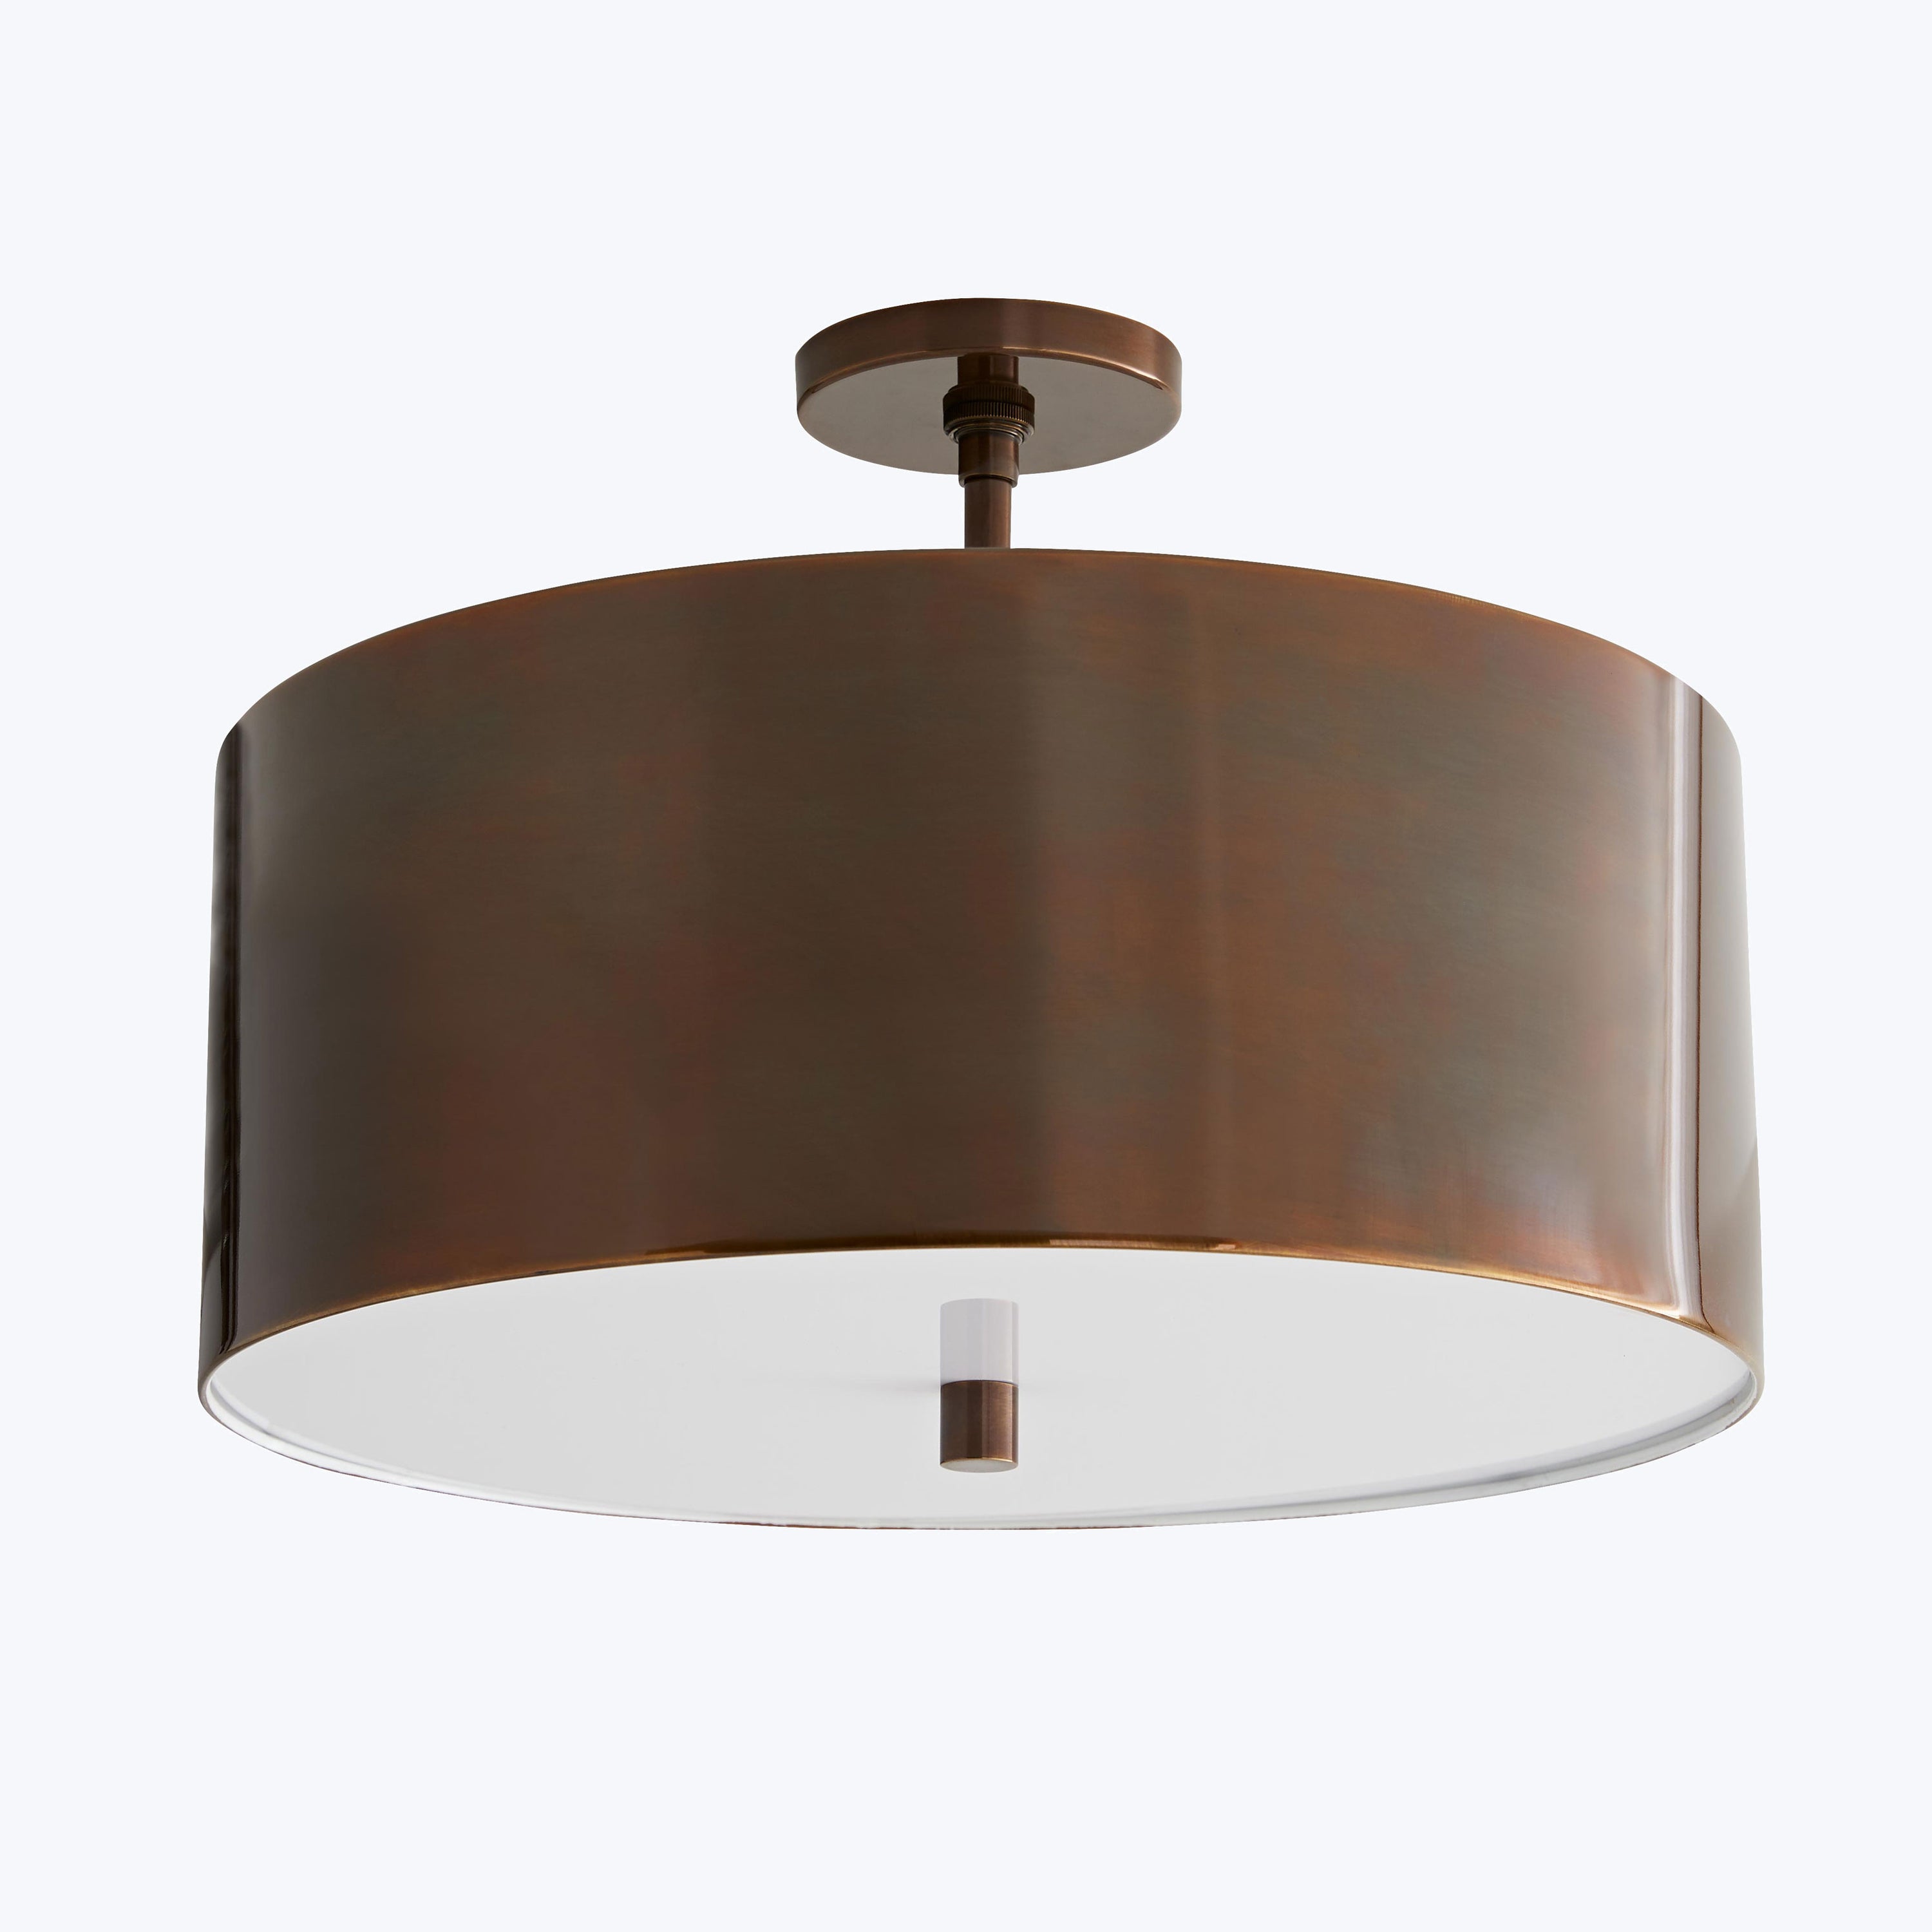 Ceiling mounted flush mount light with sleek bronze design.